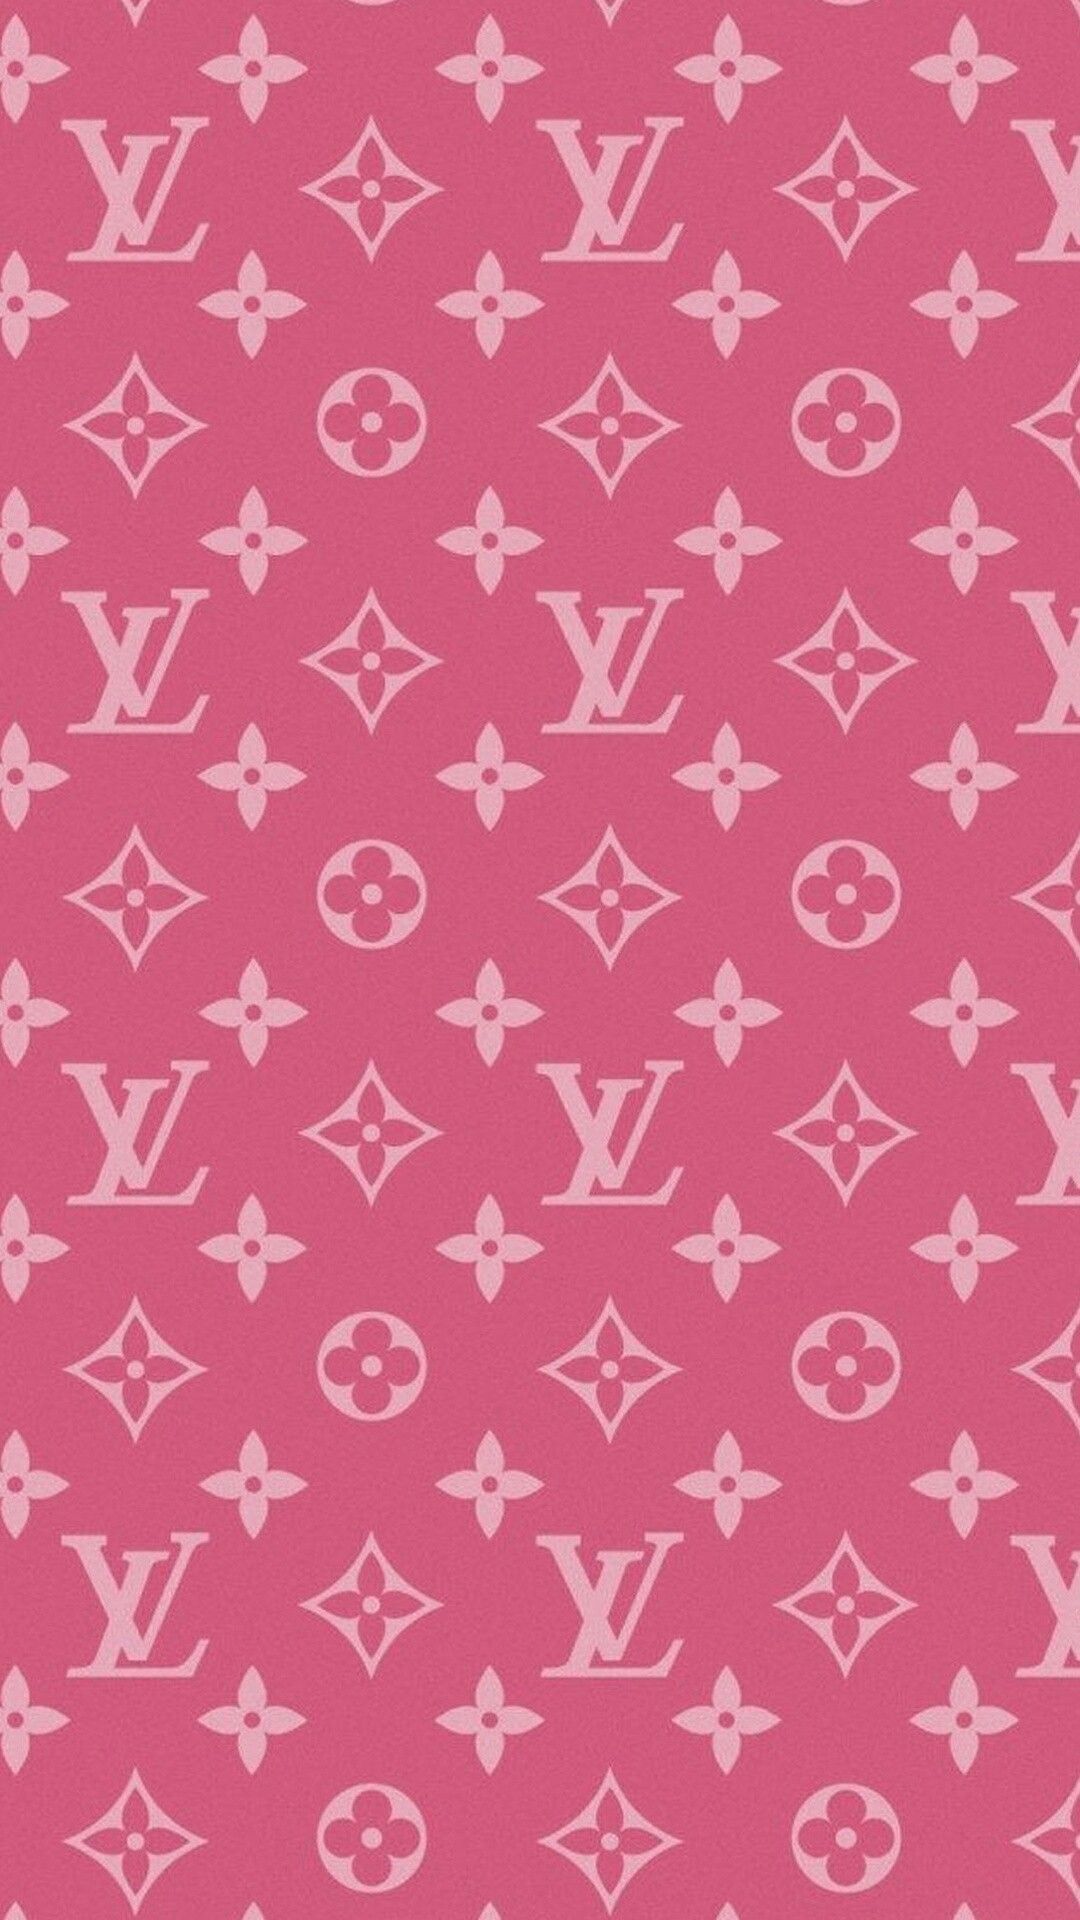 Supreme X Louis Vuitton Iphone Wallpaper